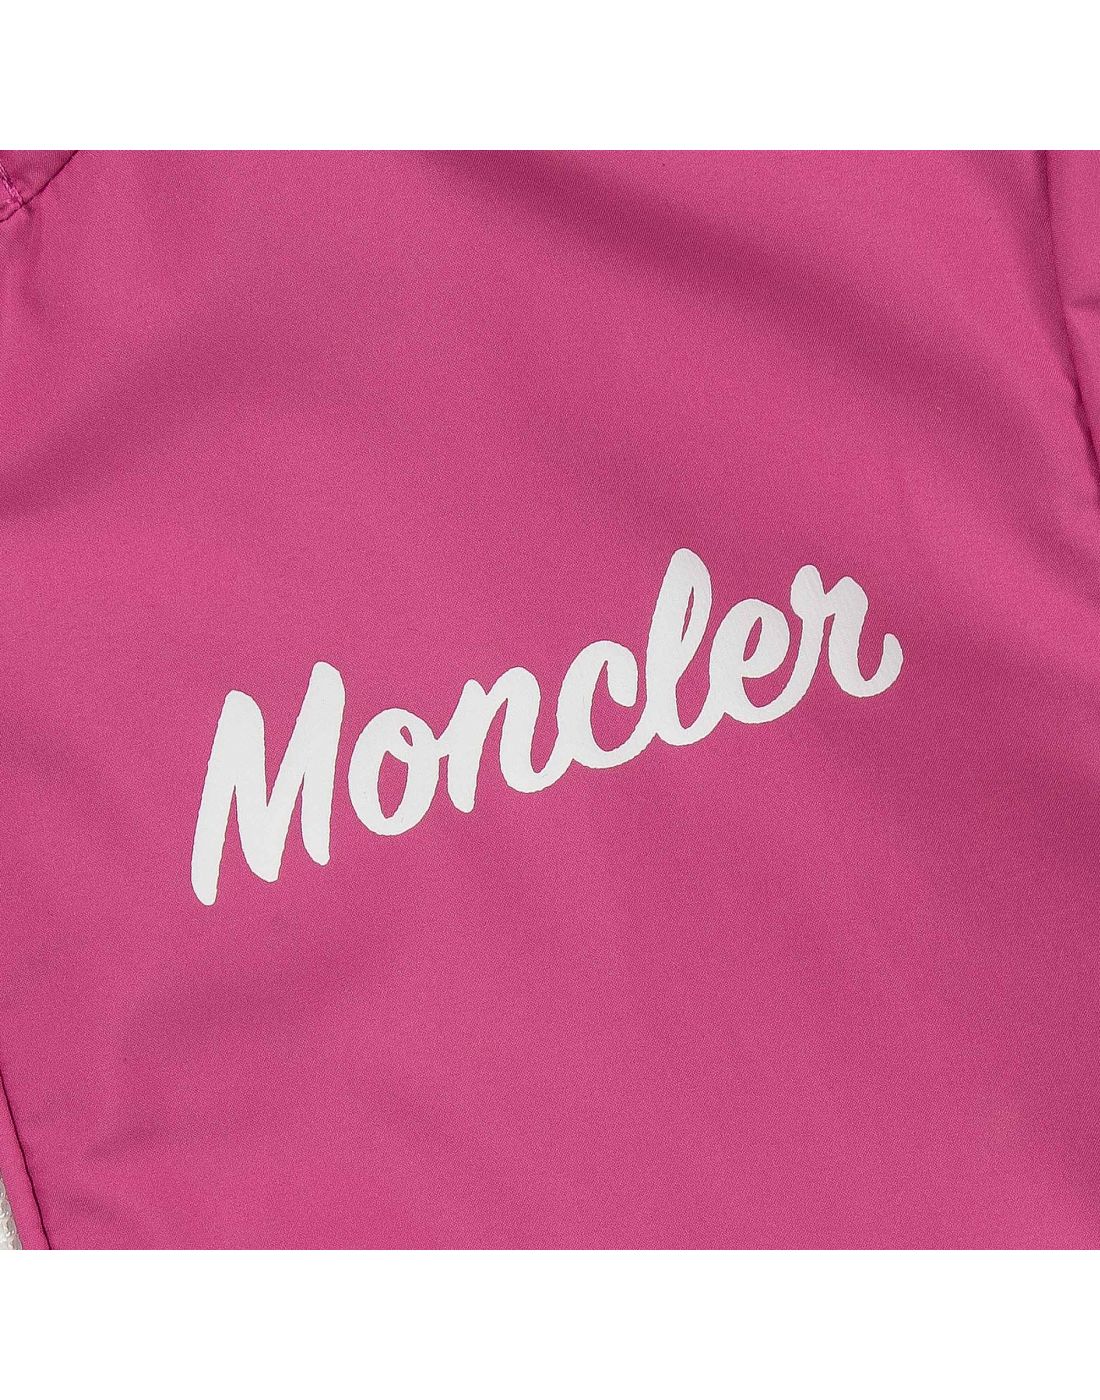 Moncler Baby Jacket